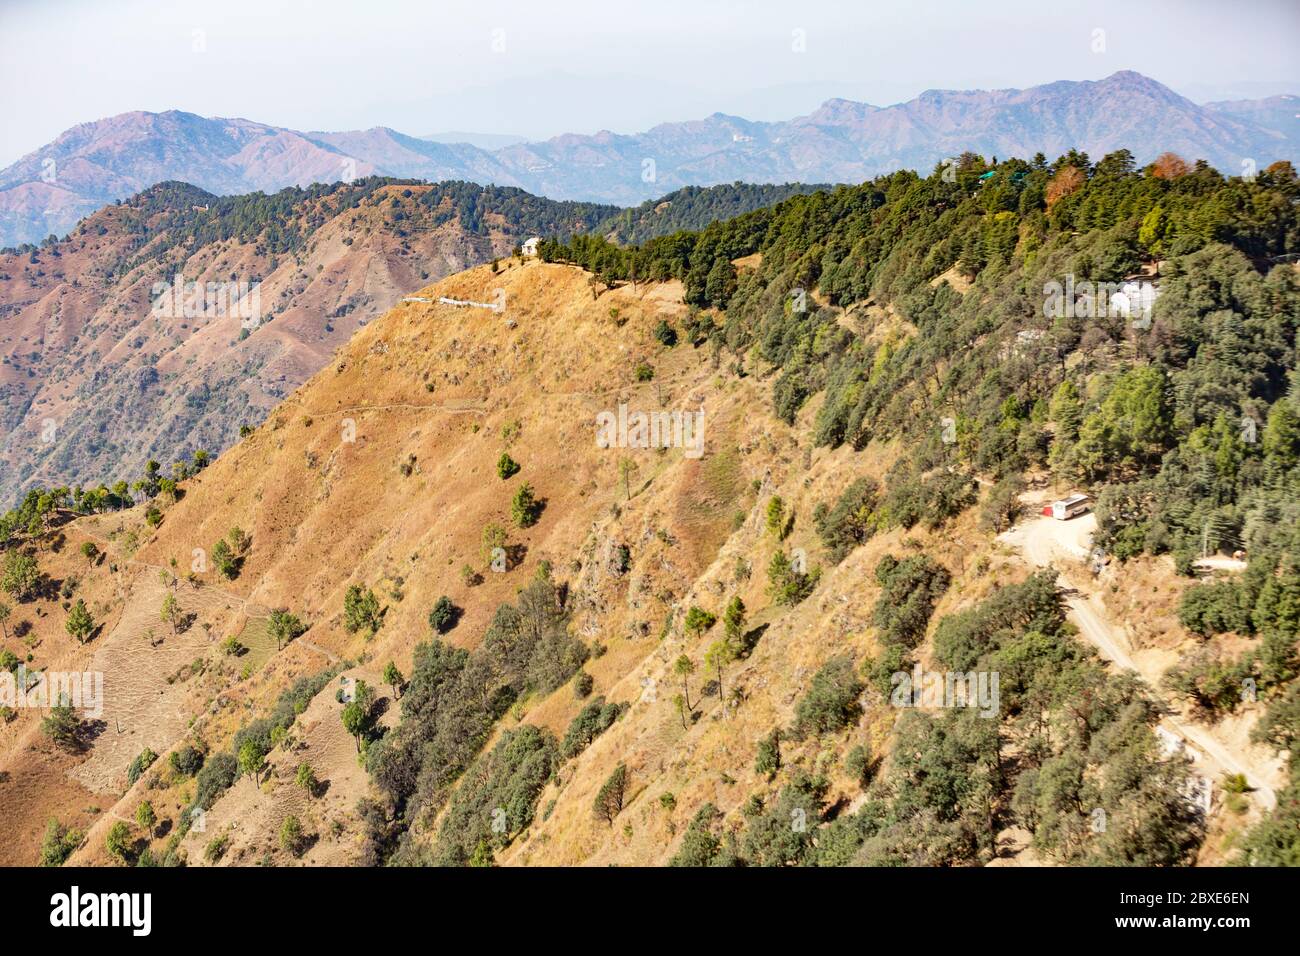 Mountain and valleys at Hill Station of Nainital, Uttarakhand, India Stock Photo